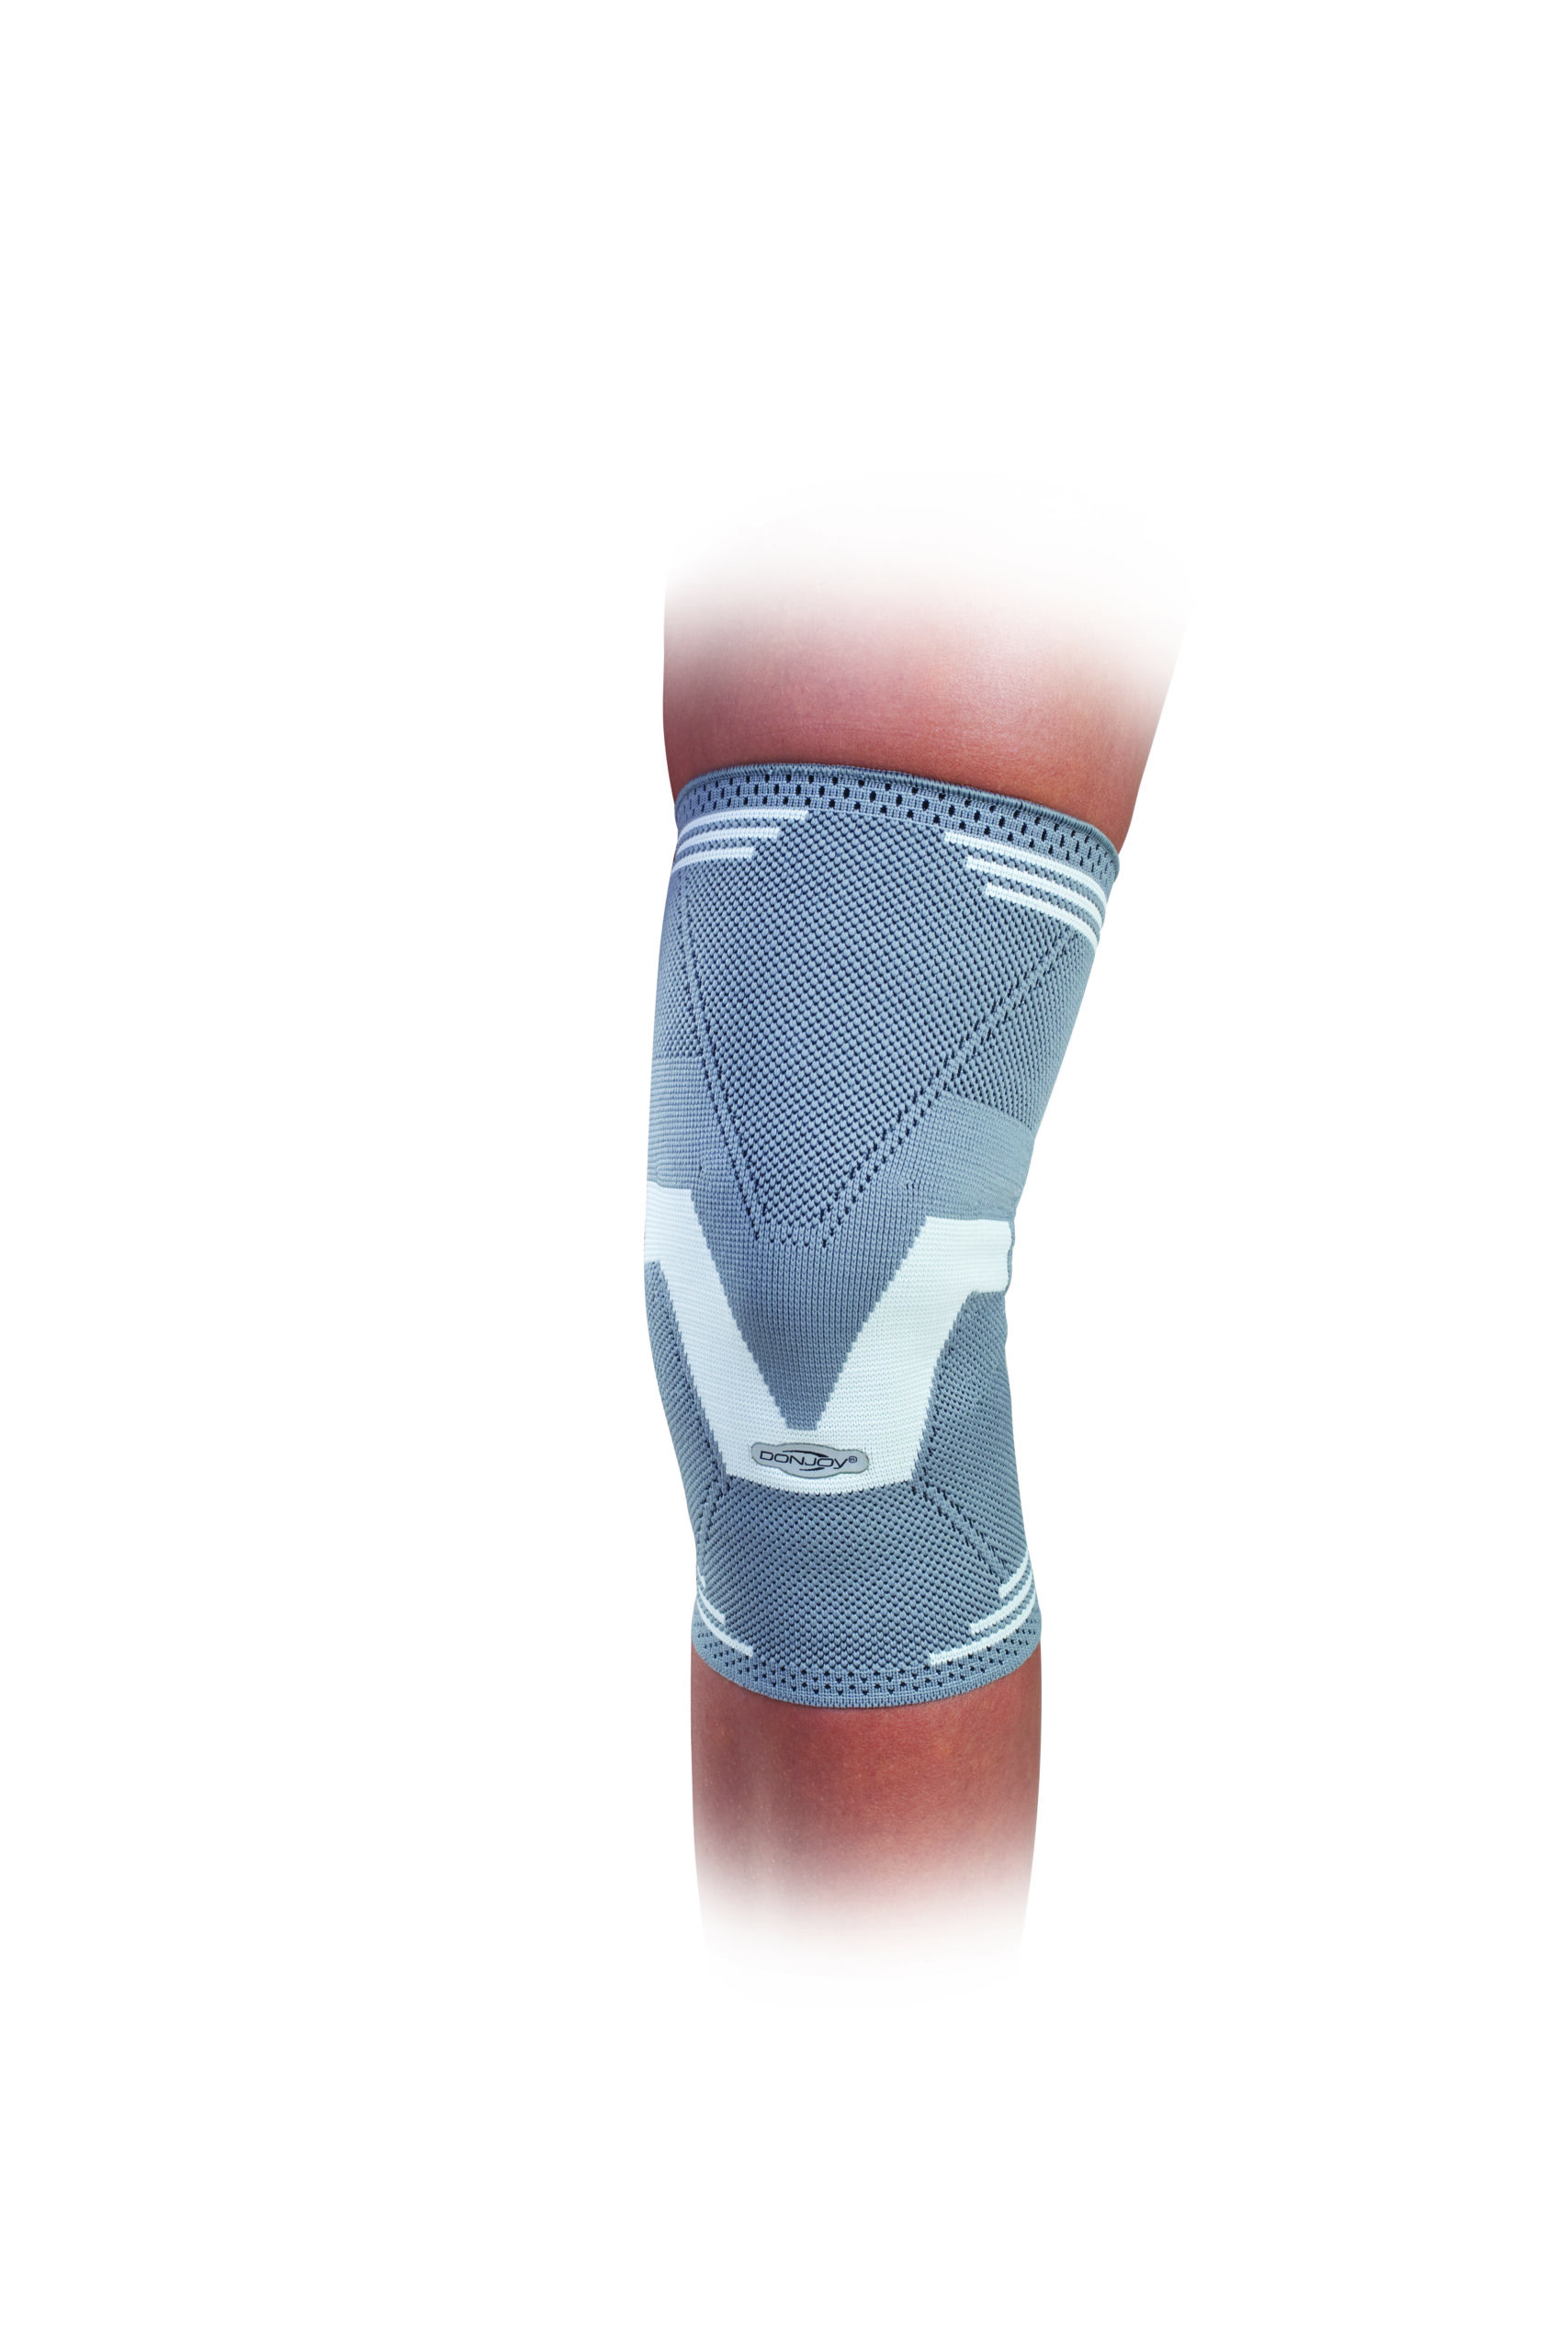 Fortilax Elastic Knee Sleeve